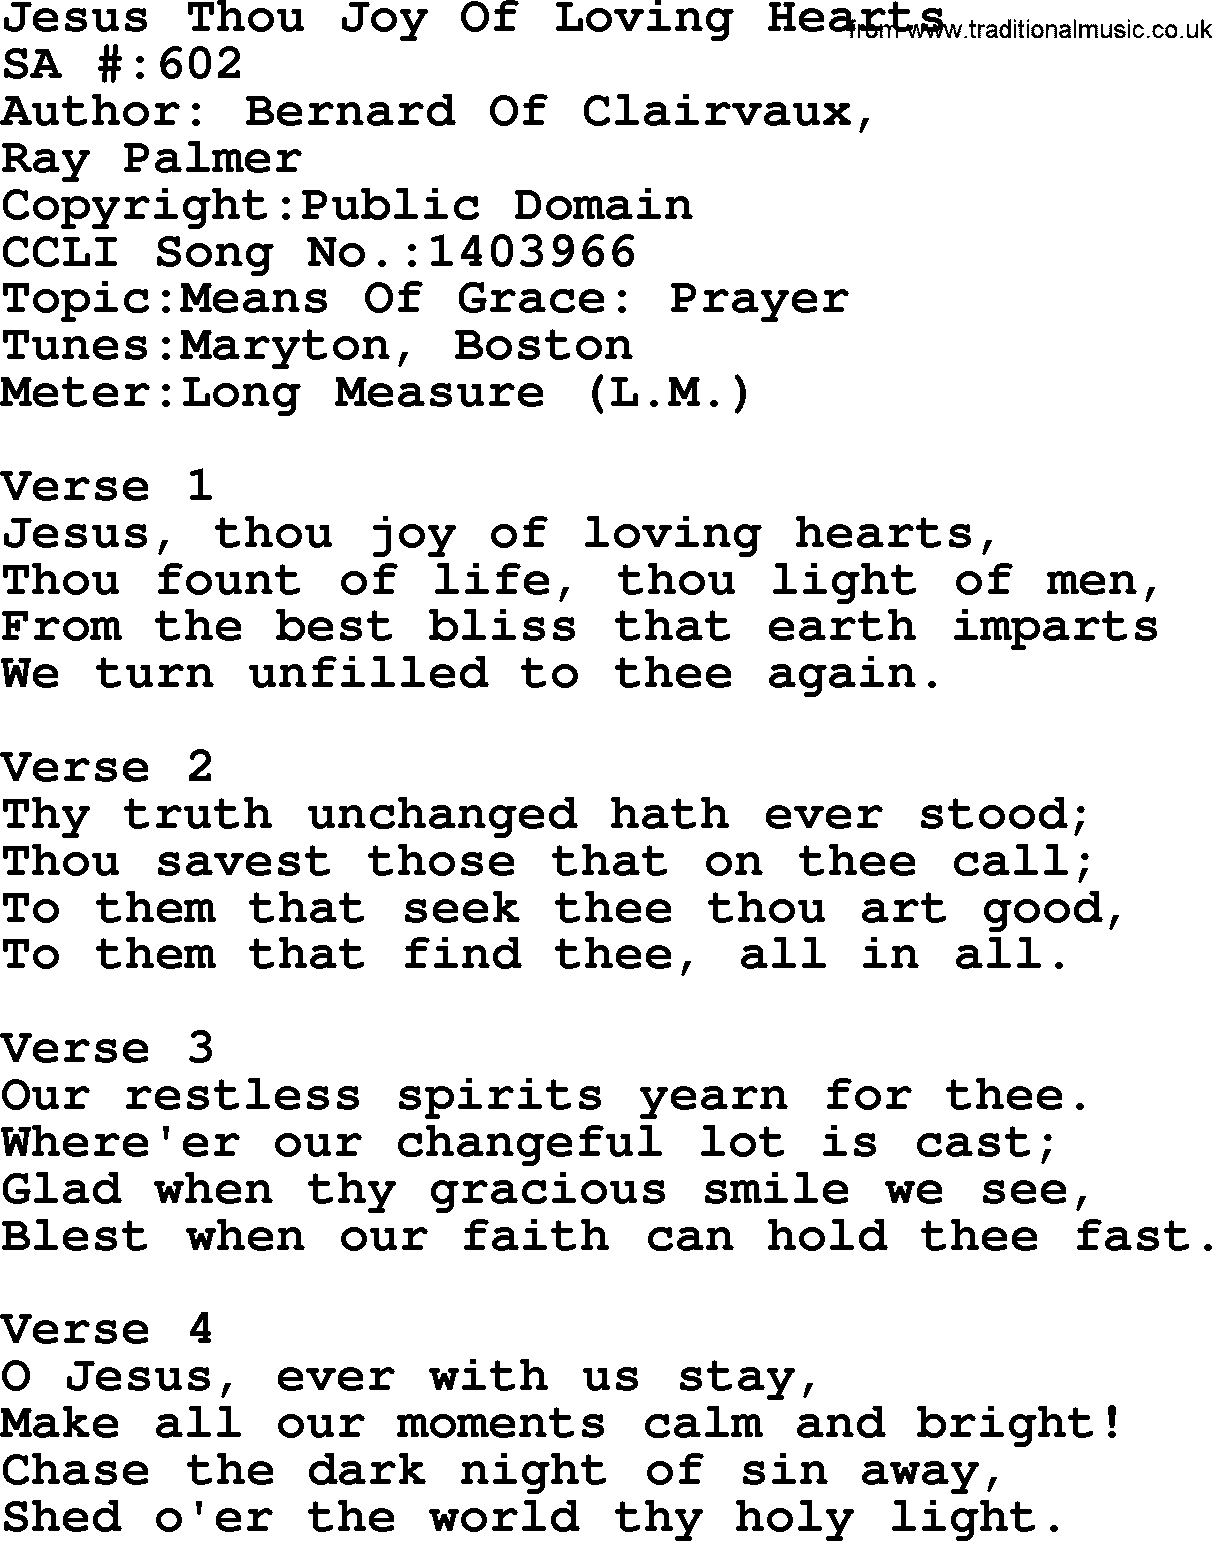 Salvation Army Hymnal, title: Jesus Thou Joy Of Loving Hearts, with lyrics and PDF,